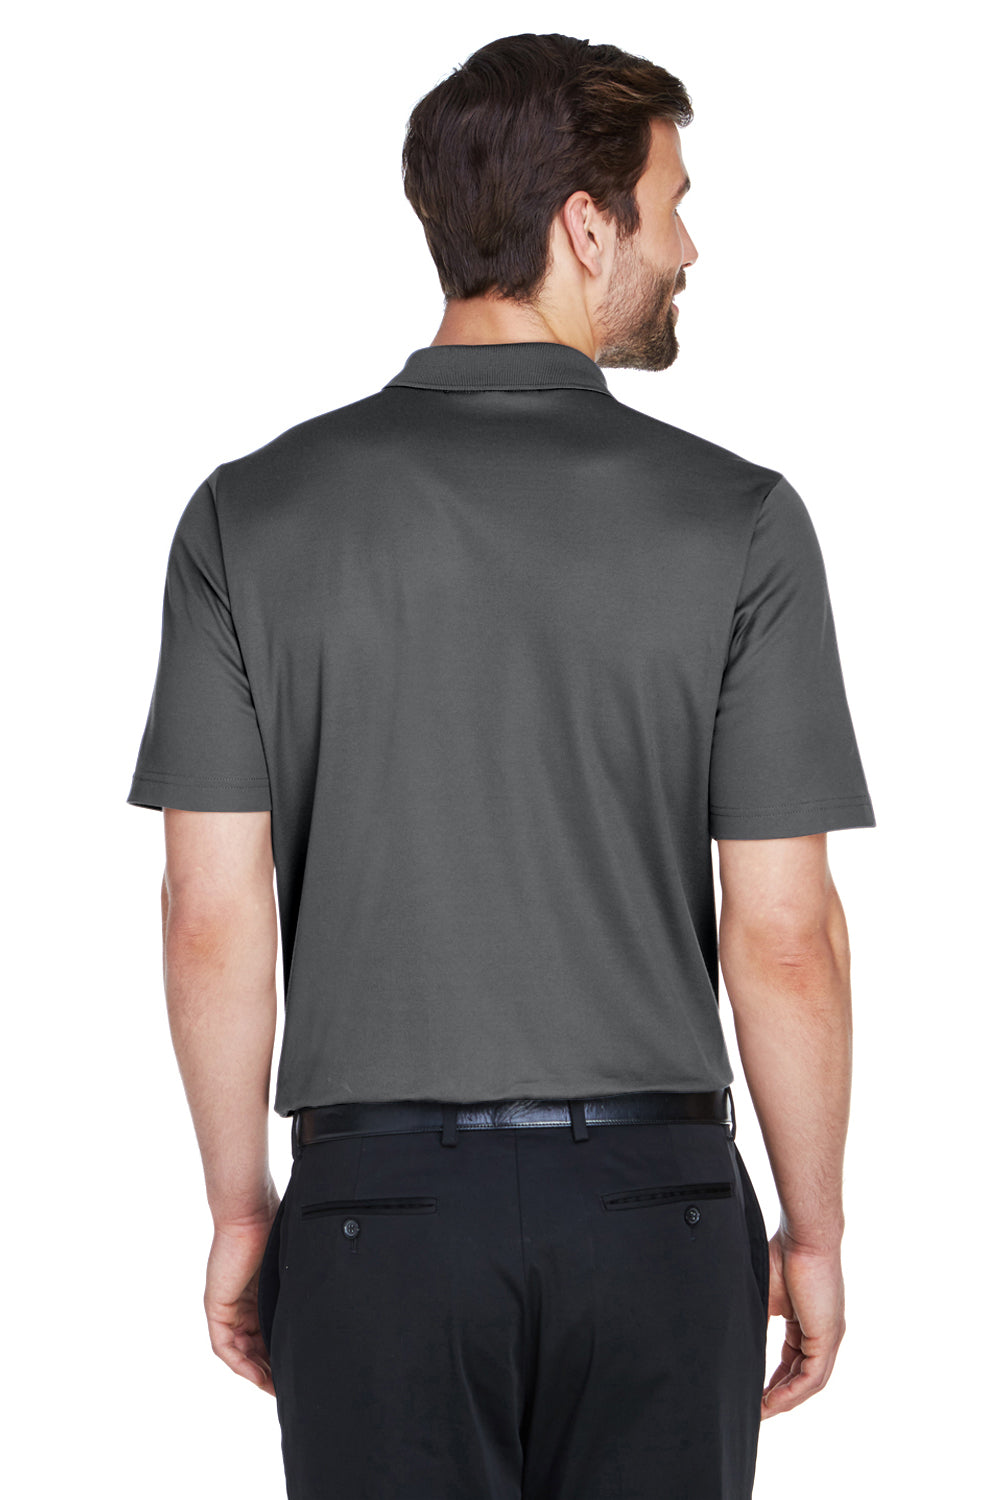 Devon & Jones DG20 Mens CrownLux Performance Moisture Wicking Short Sleeve Polo Shirt Graphite Grey Back